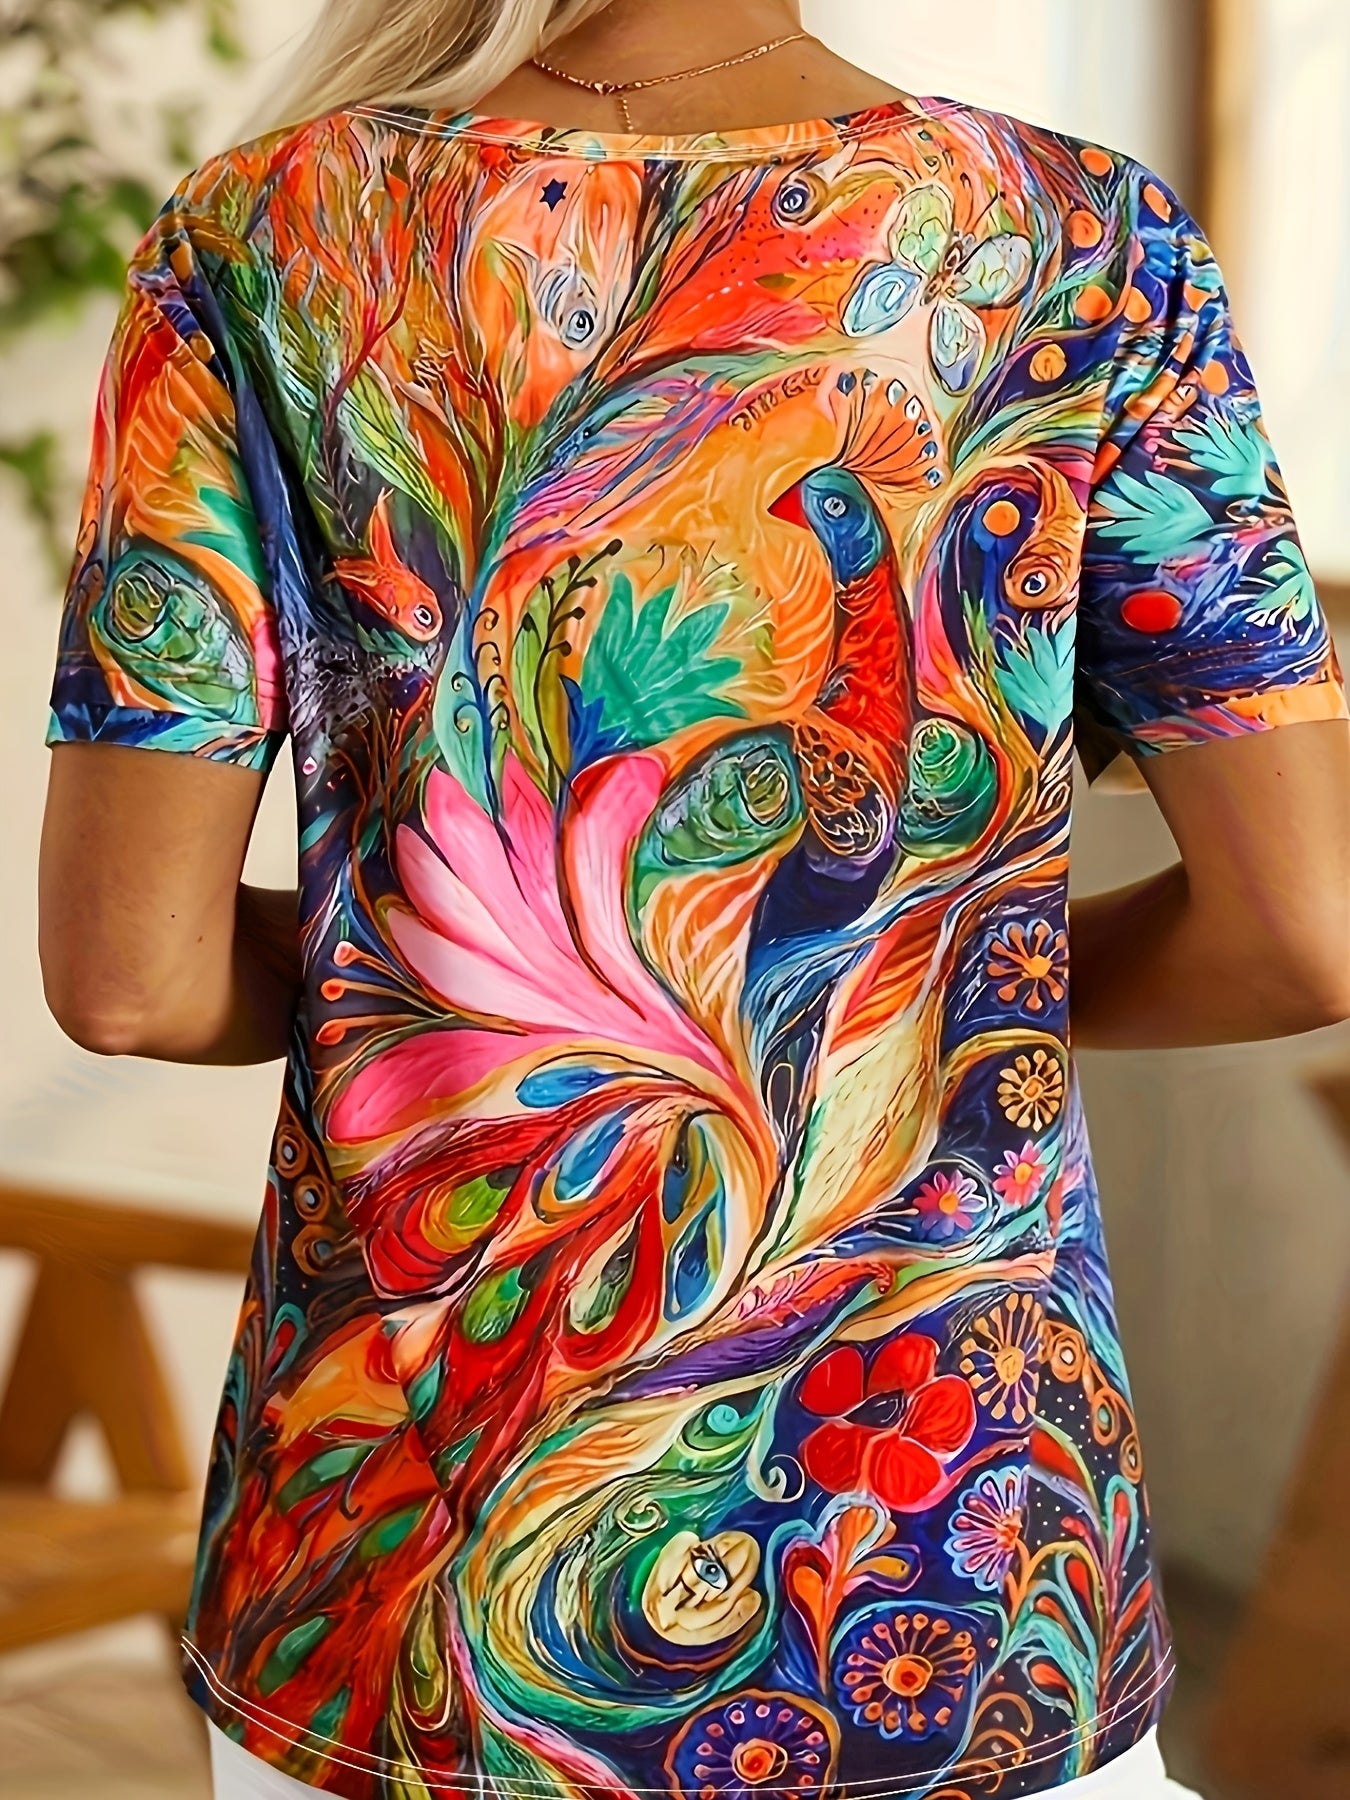 Vzyzv Colorful All Over Print V Neck T-Shirt, Casual Short Sleeve T-Shirt For Spring & Summer, Women's Clothing